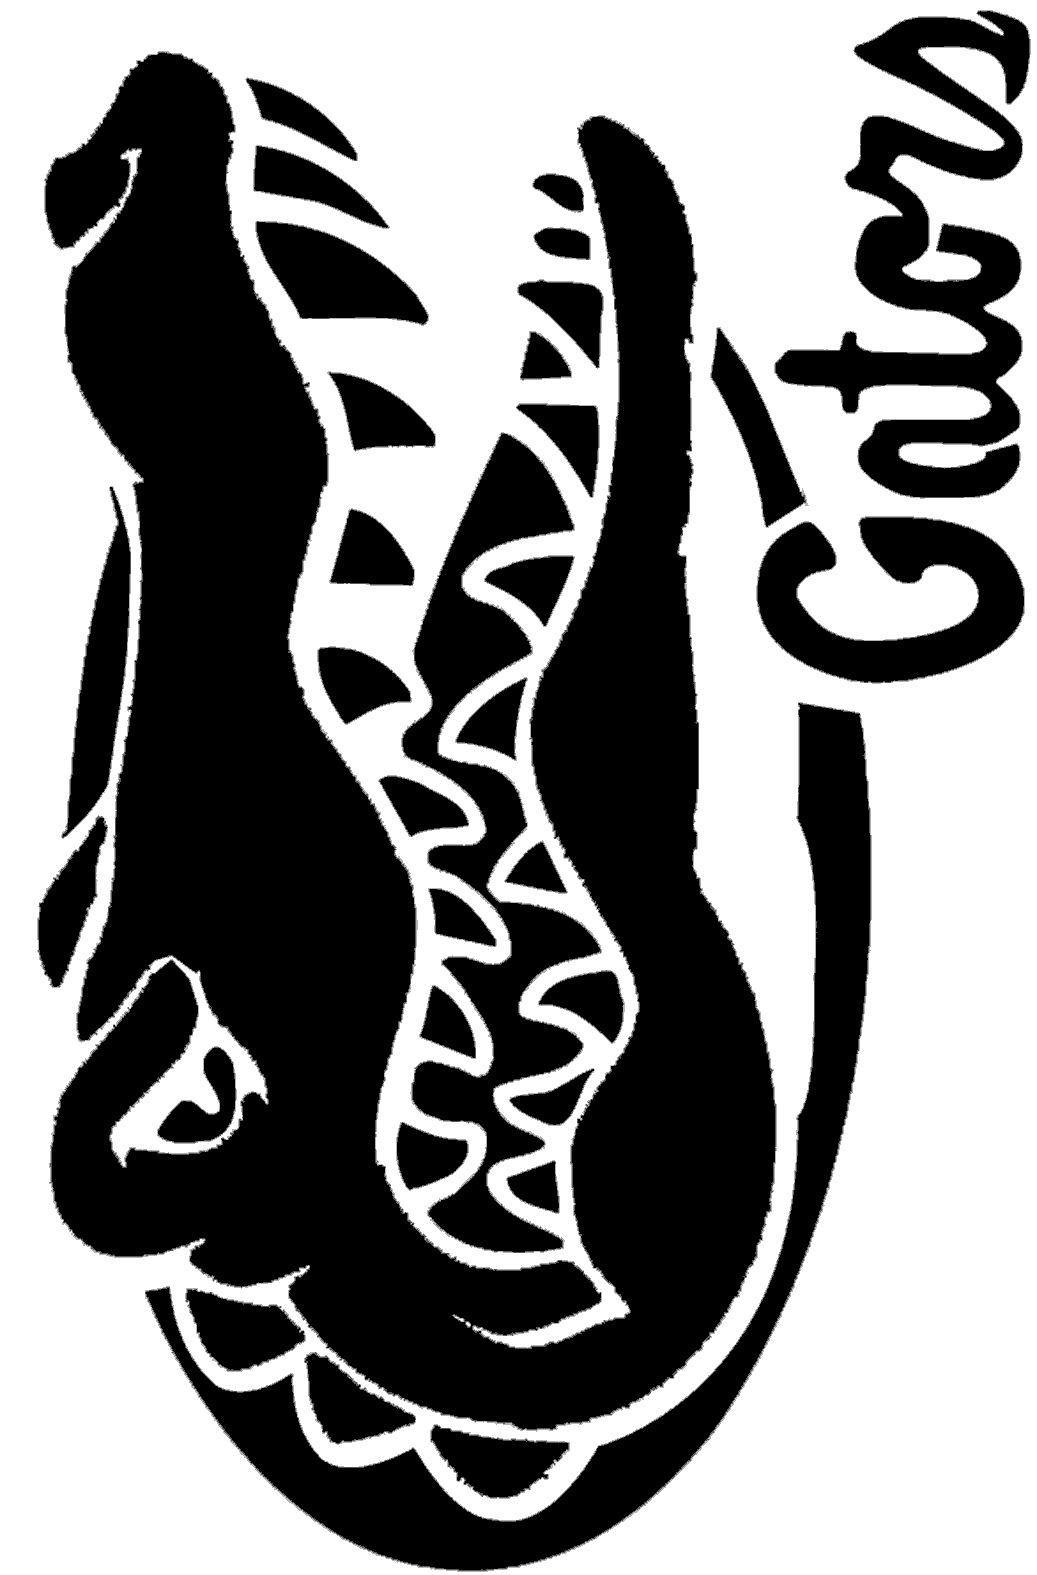 Black and White Gator Logo - And Florida Gators Logo Black White ... | All kinds of stuff ...